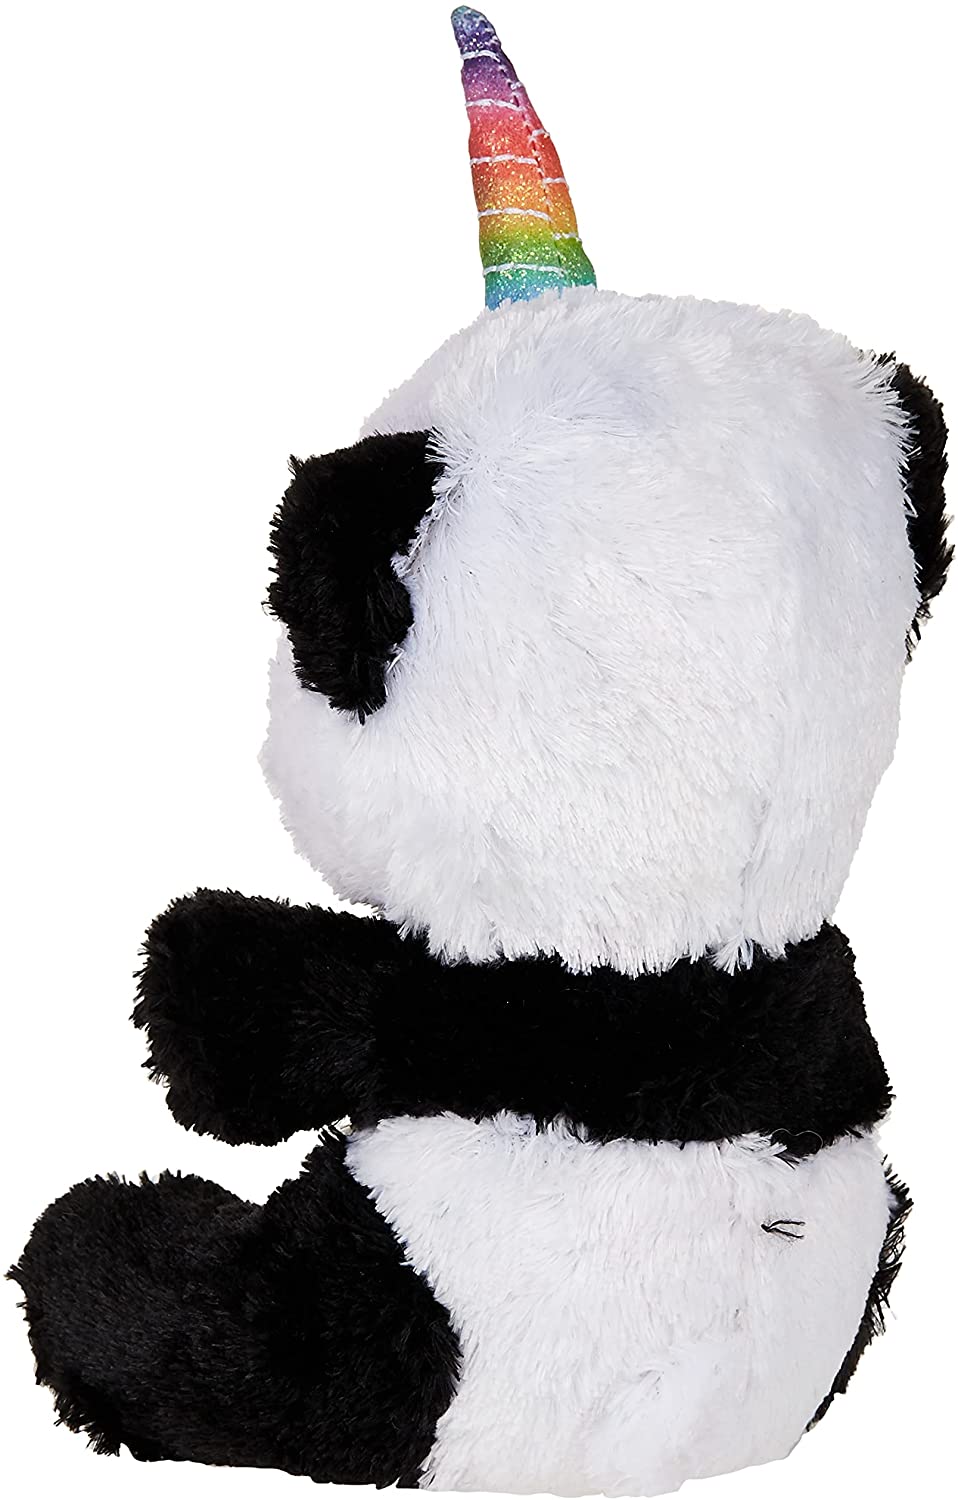 Ty UK Ltd 2005072 Paris Panda W/Horn - Beanie Boos Stuffed Animal, Multicoloured